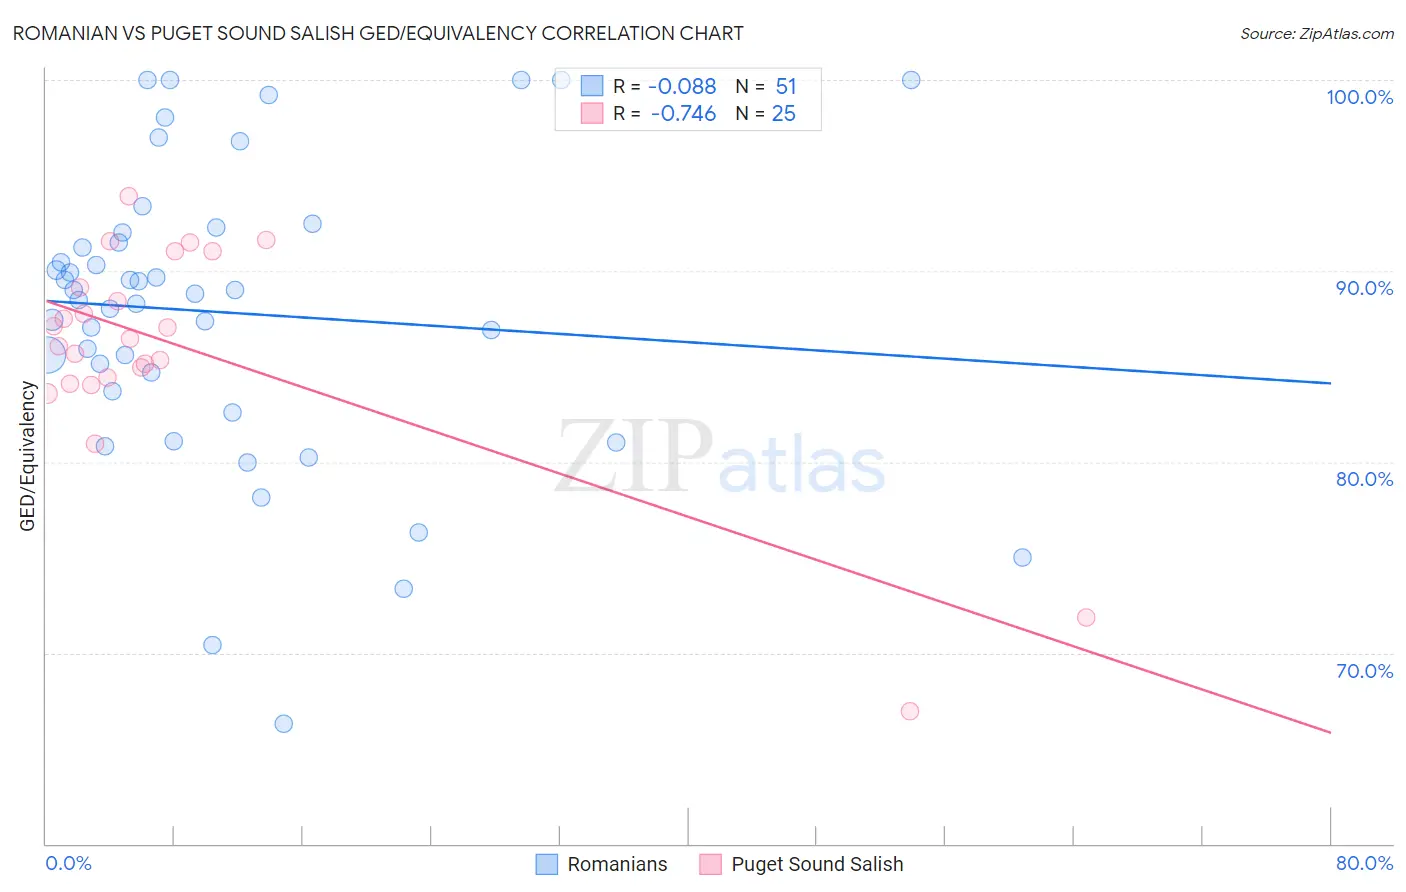 Romanian vs Puget Sound Salish GED/Equivalency